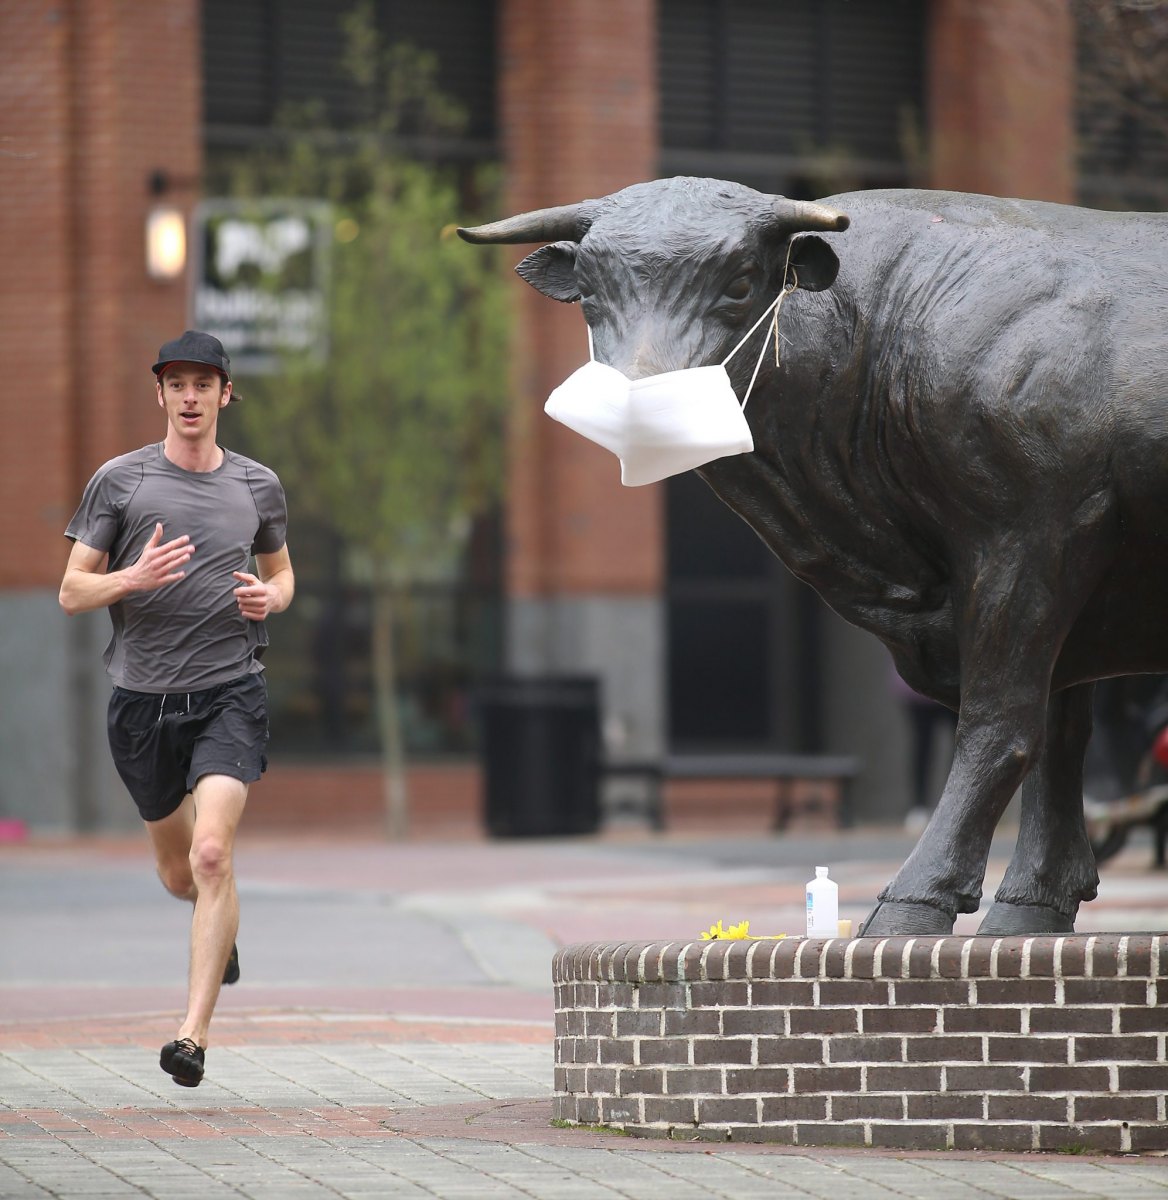 Paul Whittredge of Durham runs past Major the Bull in downtown Durham. Coronavirus day tripMarch 19, 2020. Durham, NC